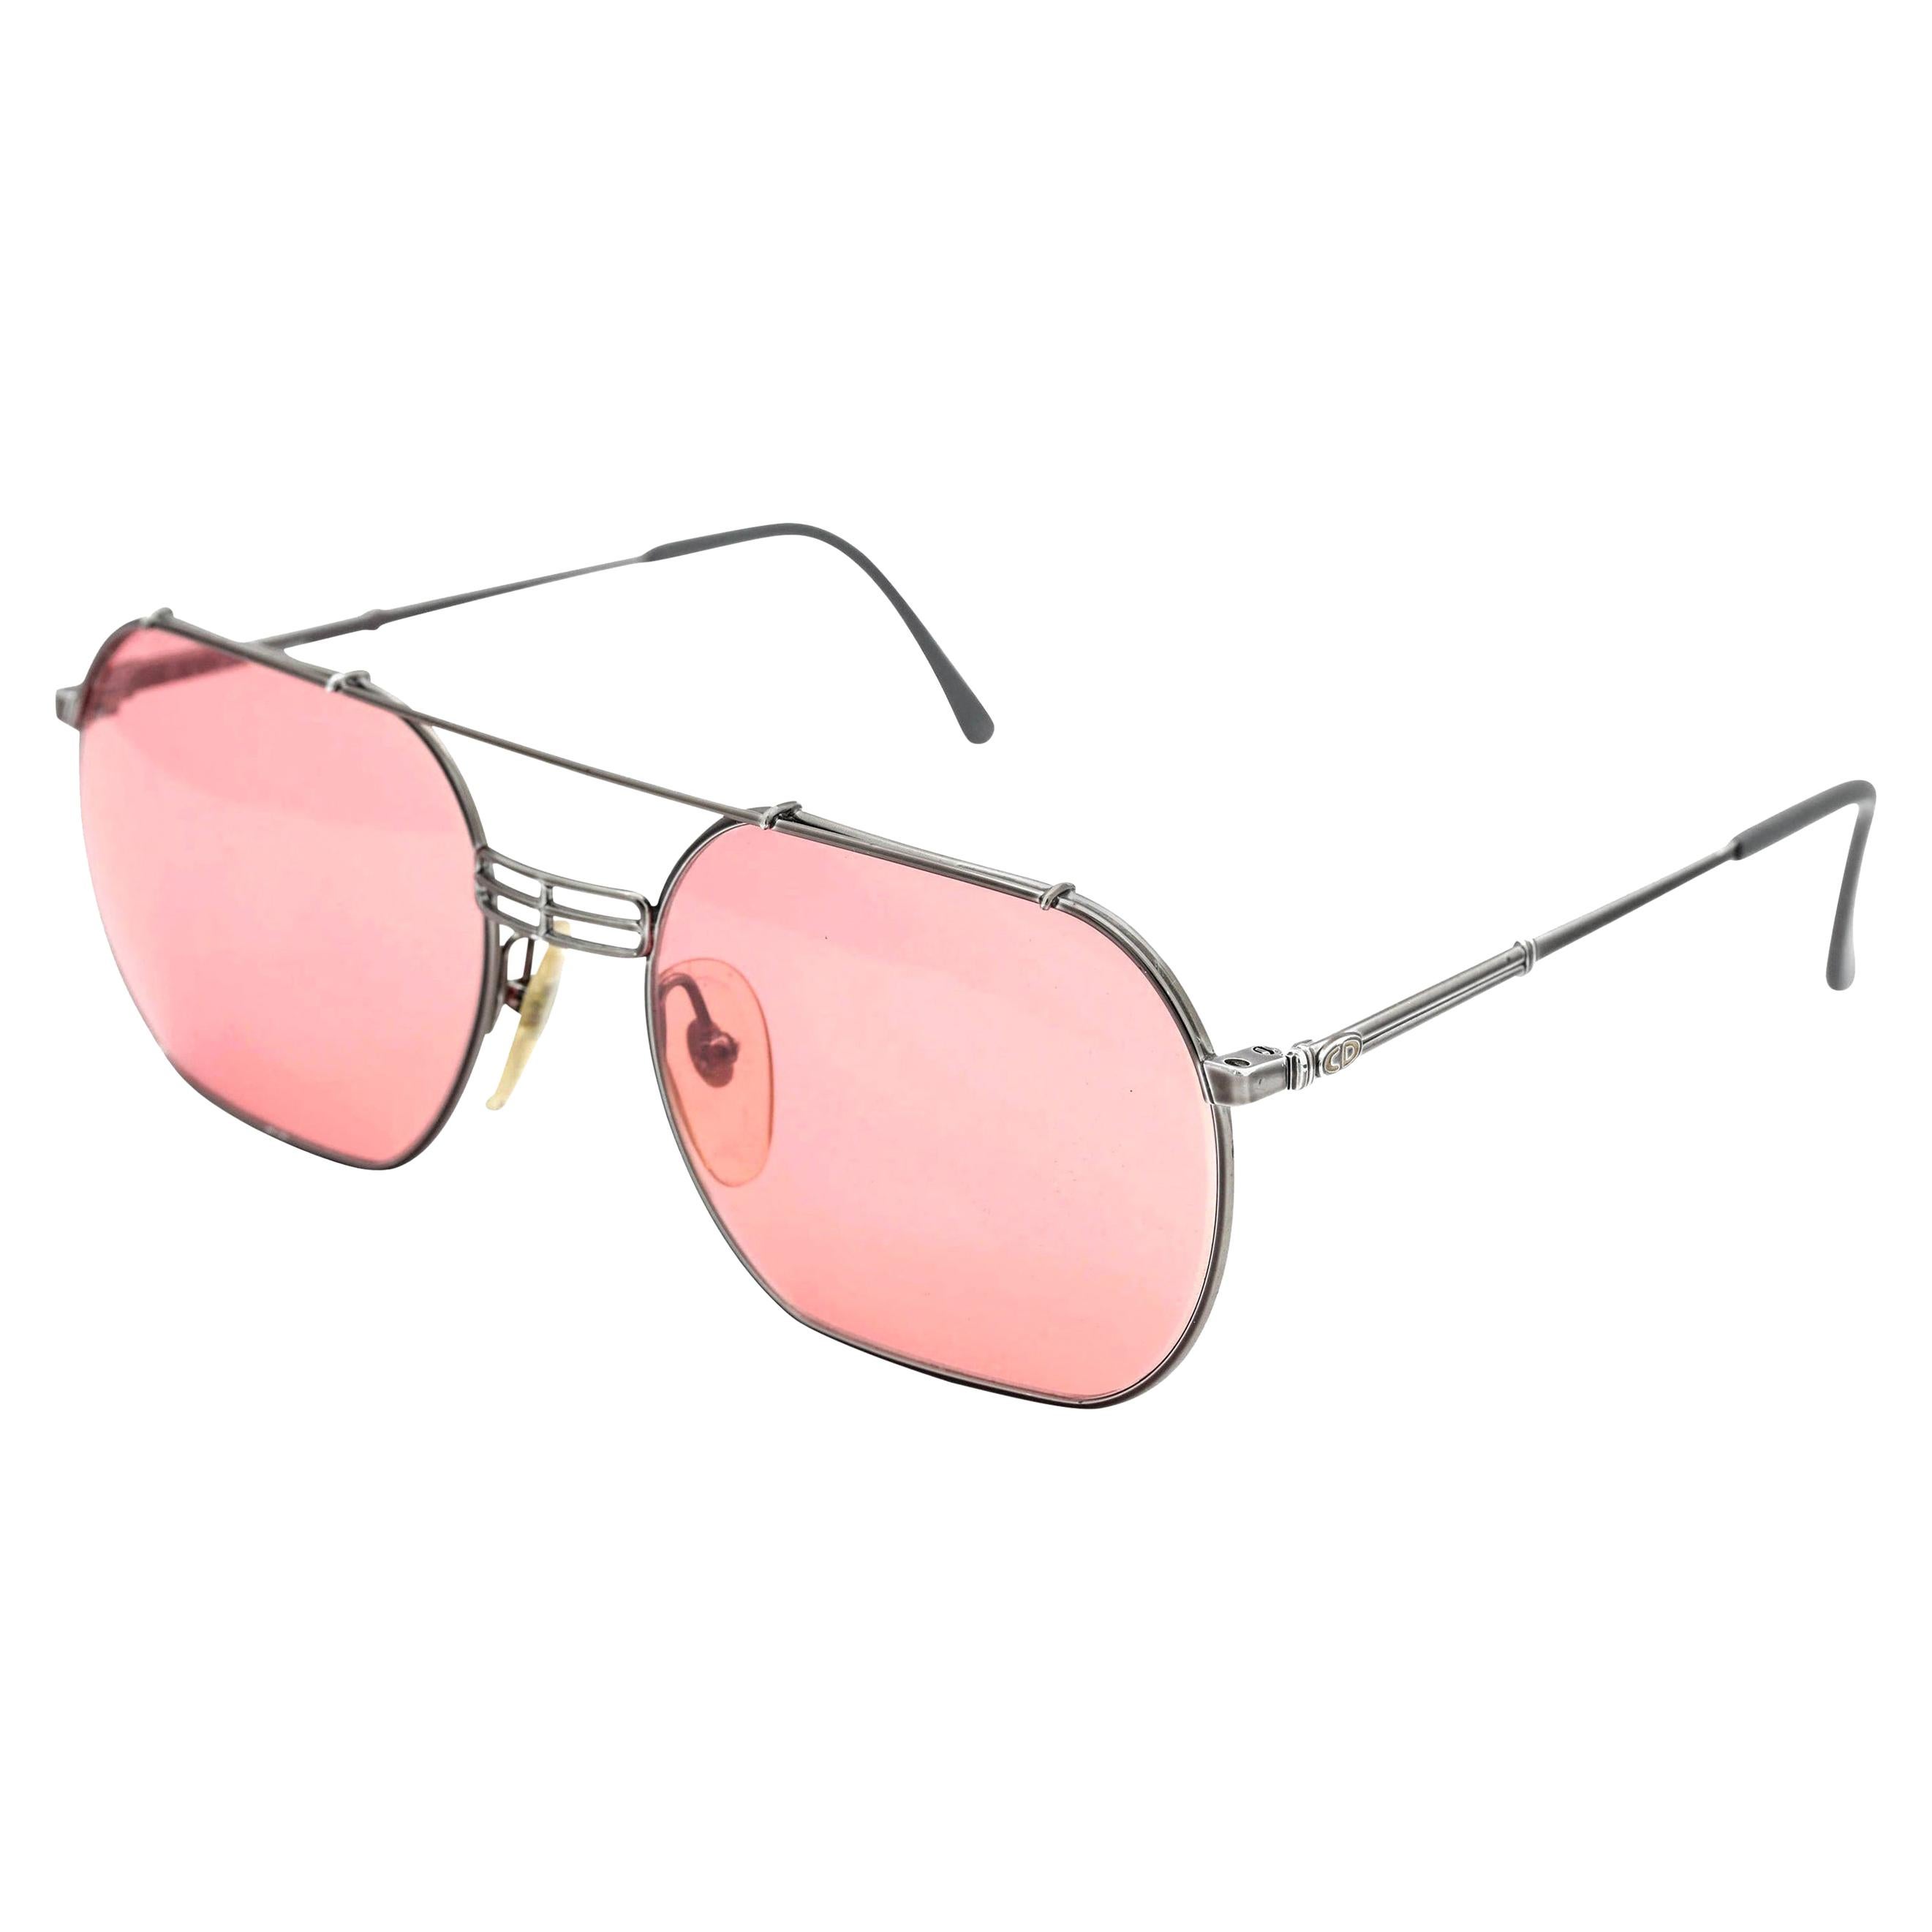 Vintage Christian Dior Aviator Sunglasses 2363 20 For Sale